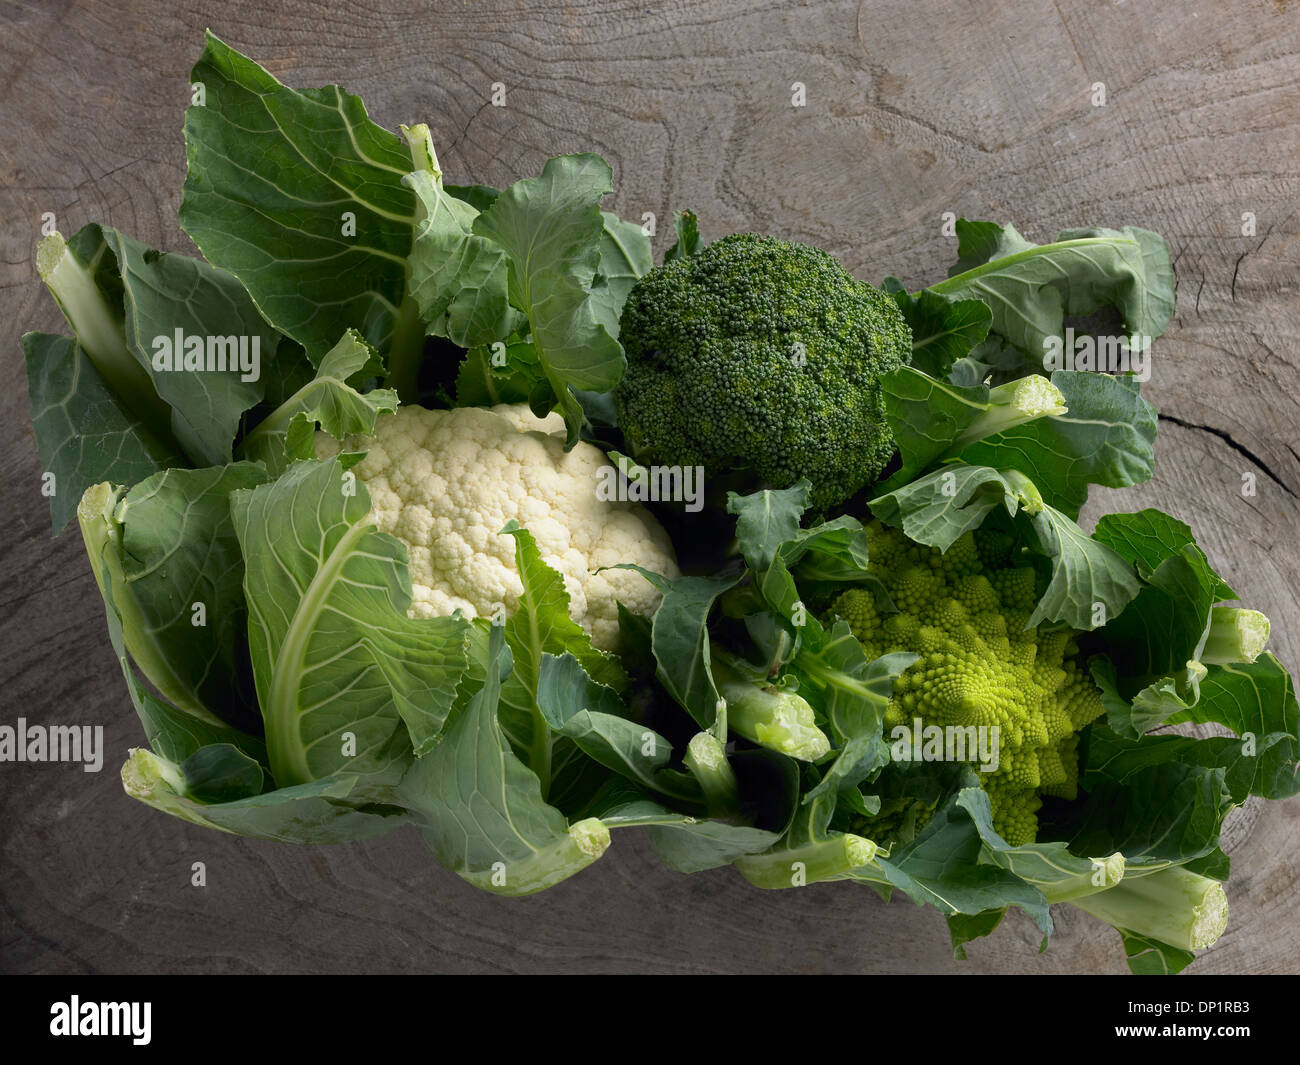 green leaf vegetables cauliflower family Stock Photo